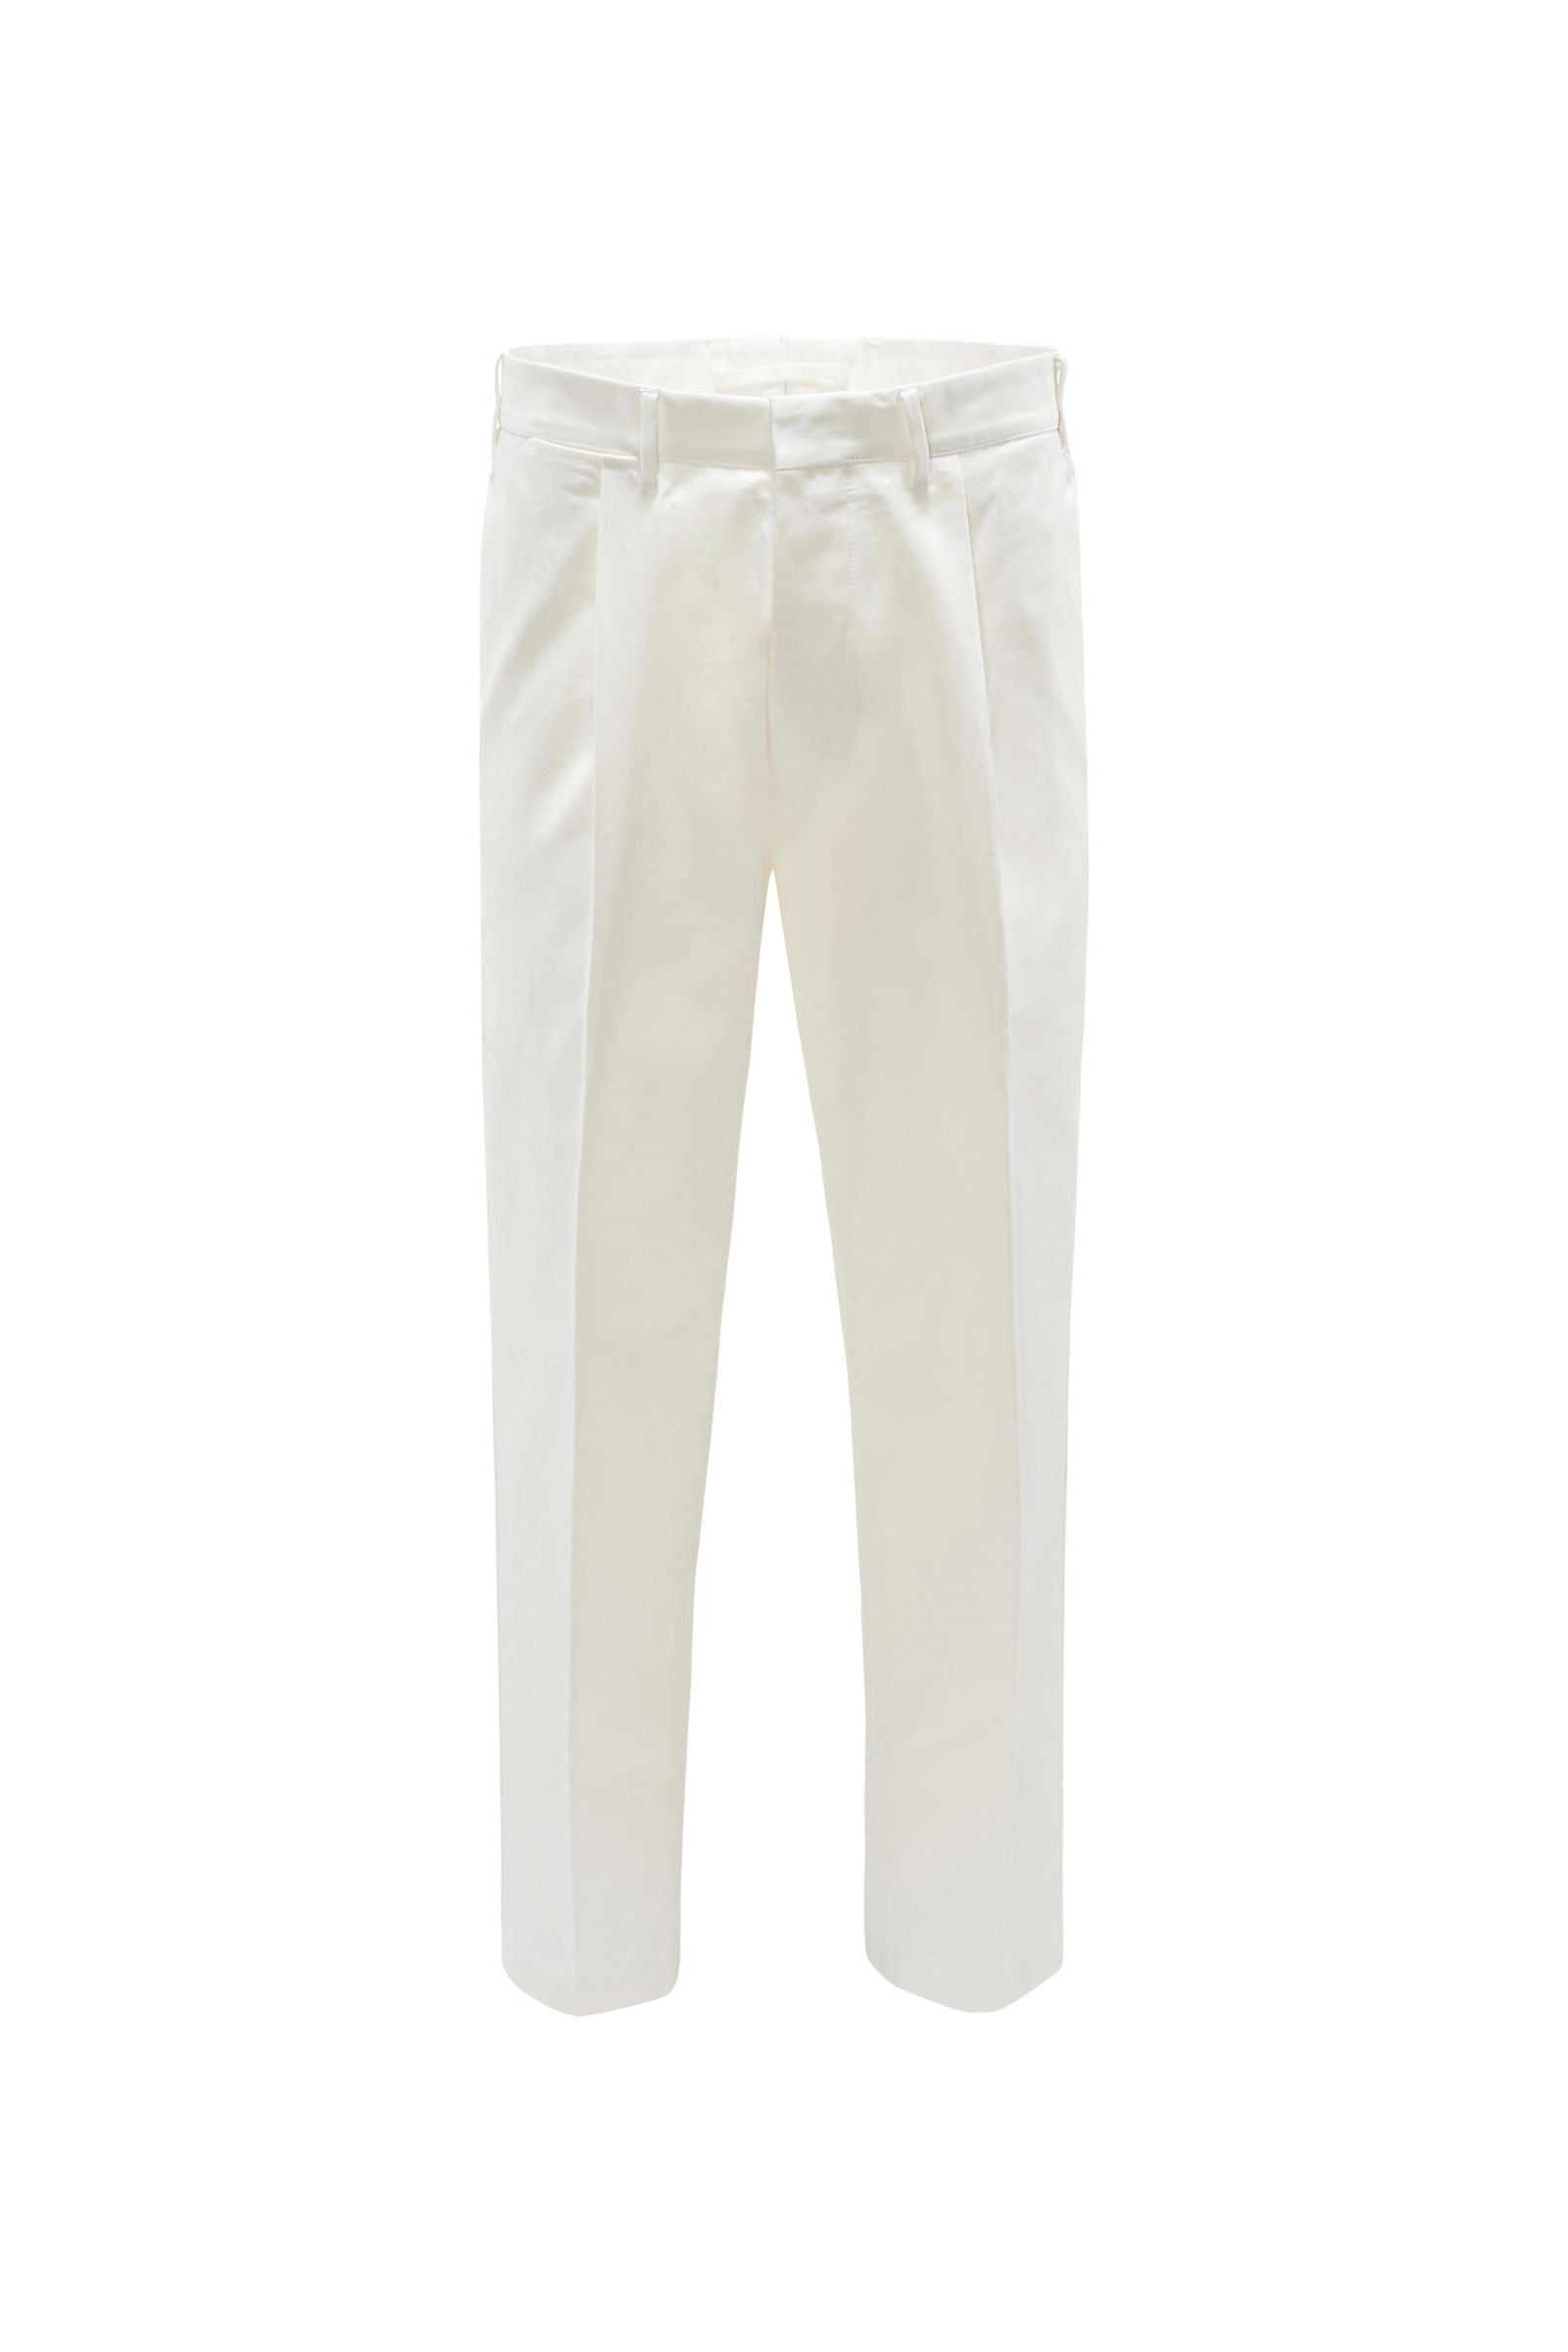 Cotton trousers 'Tonga' white